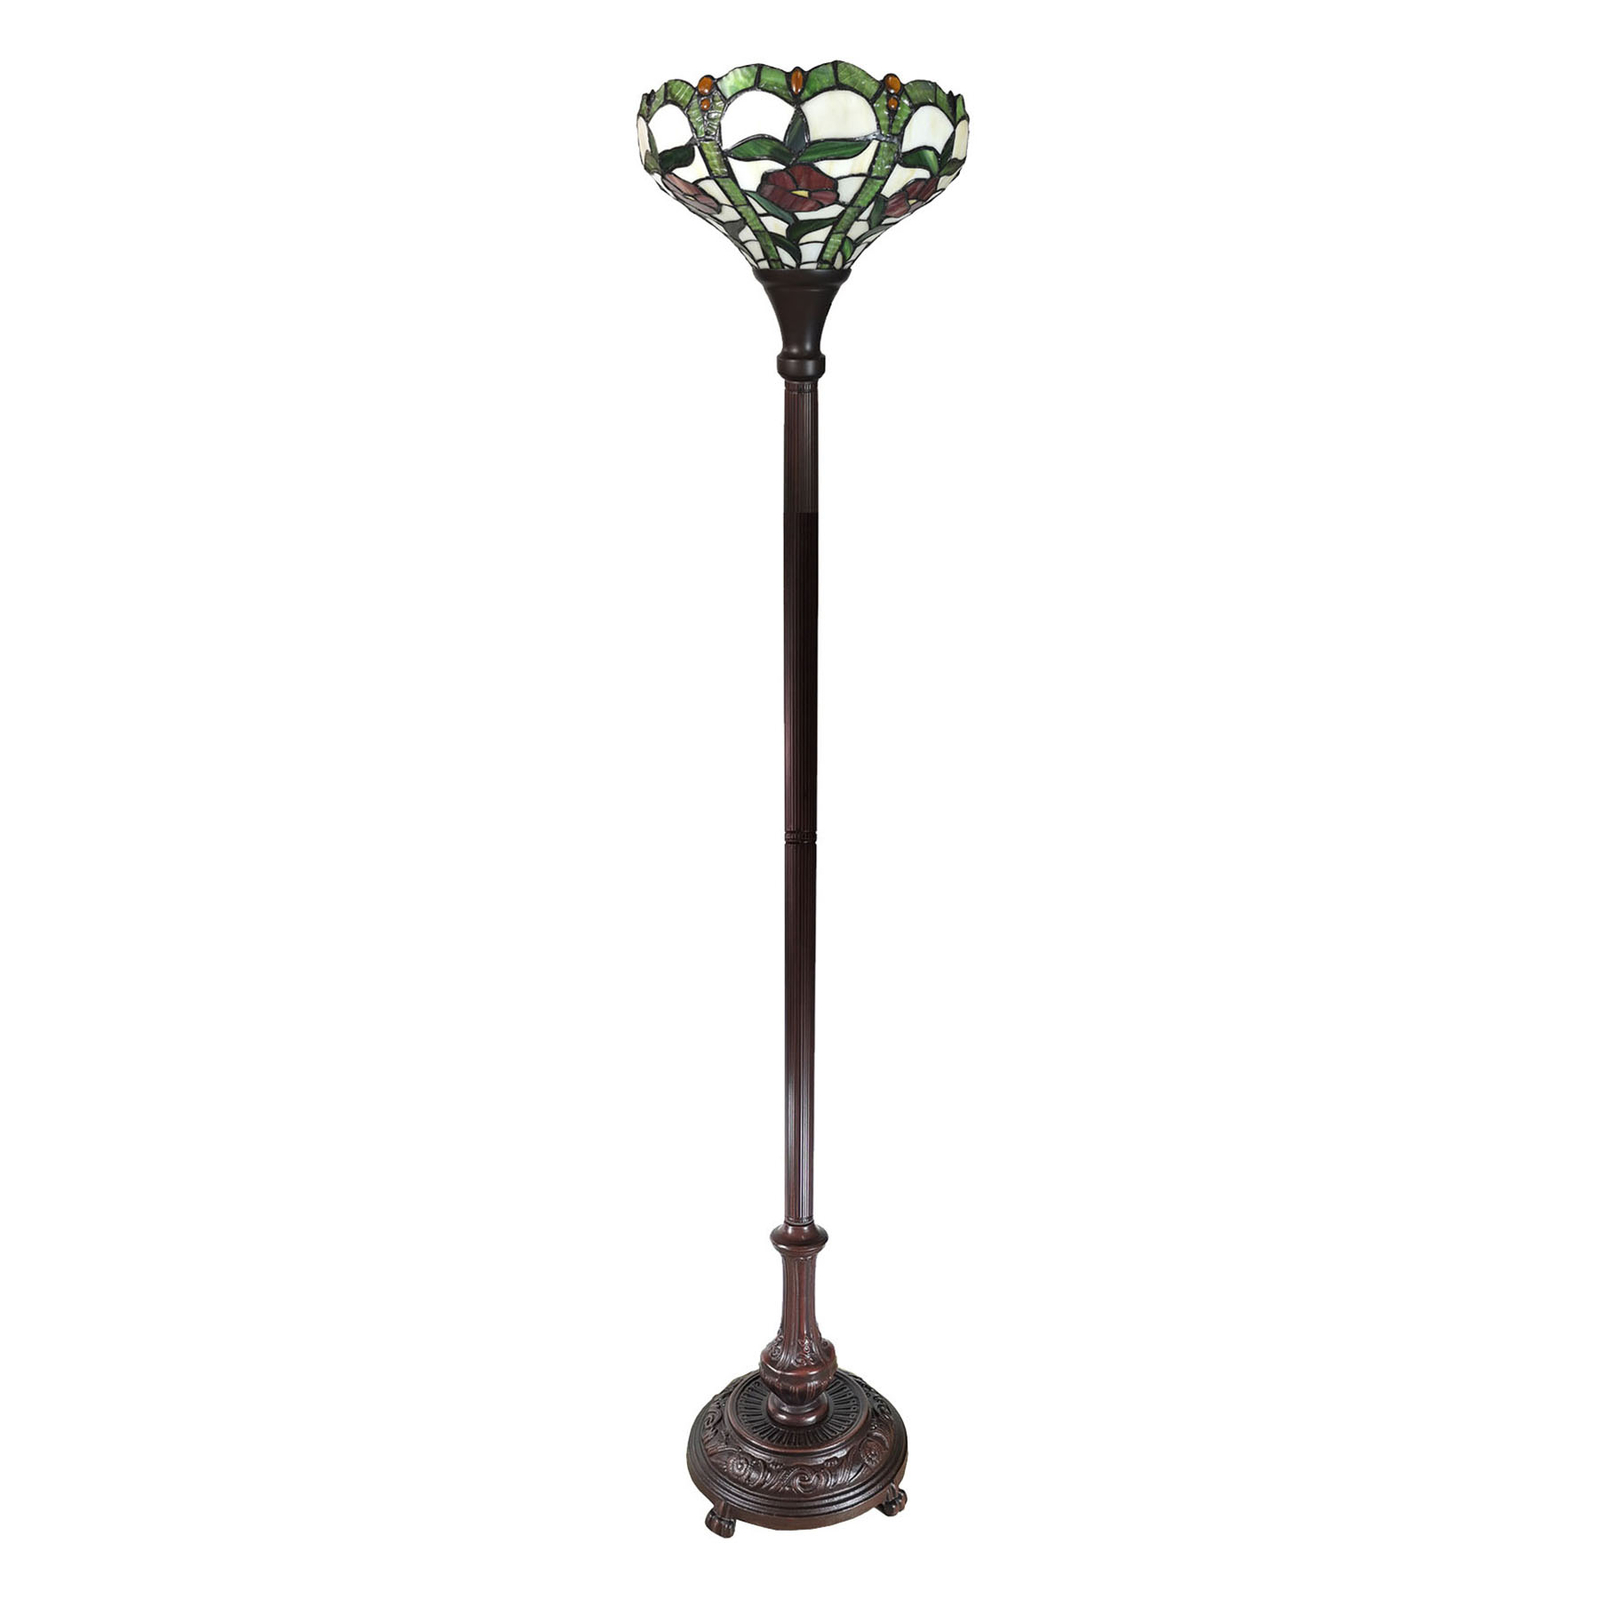 Vloerlamp 6025 met glazen kap in Tiffany-optiek